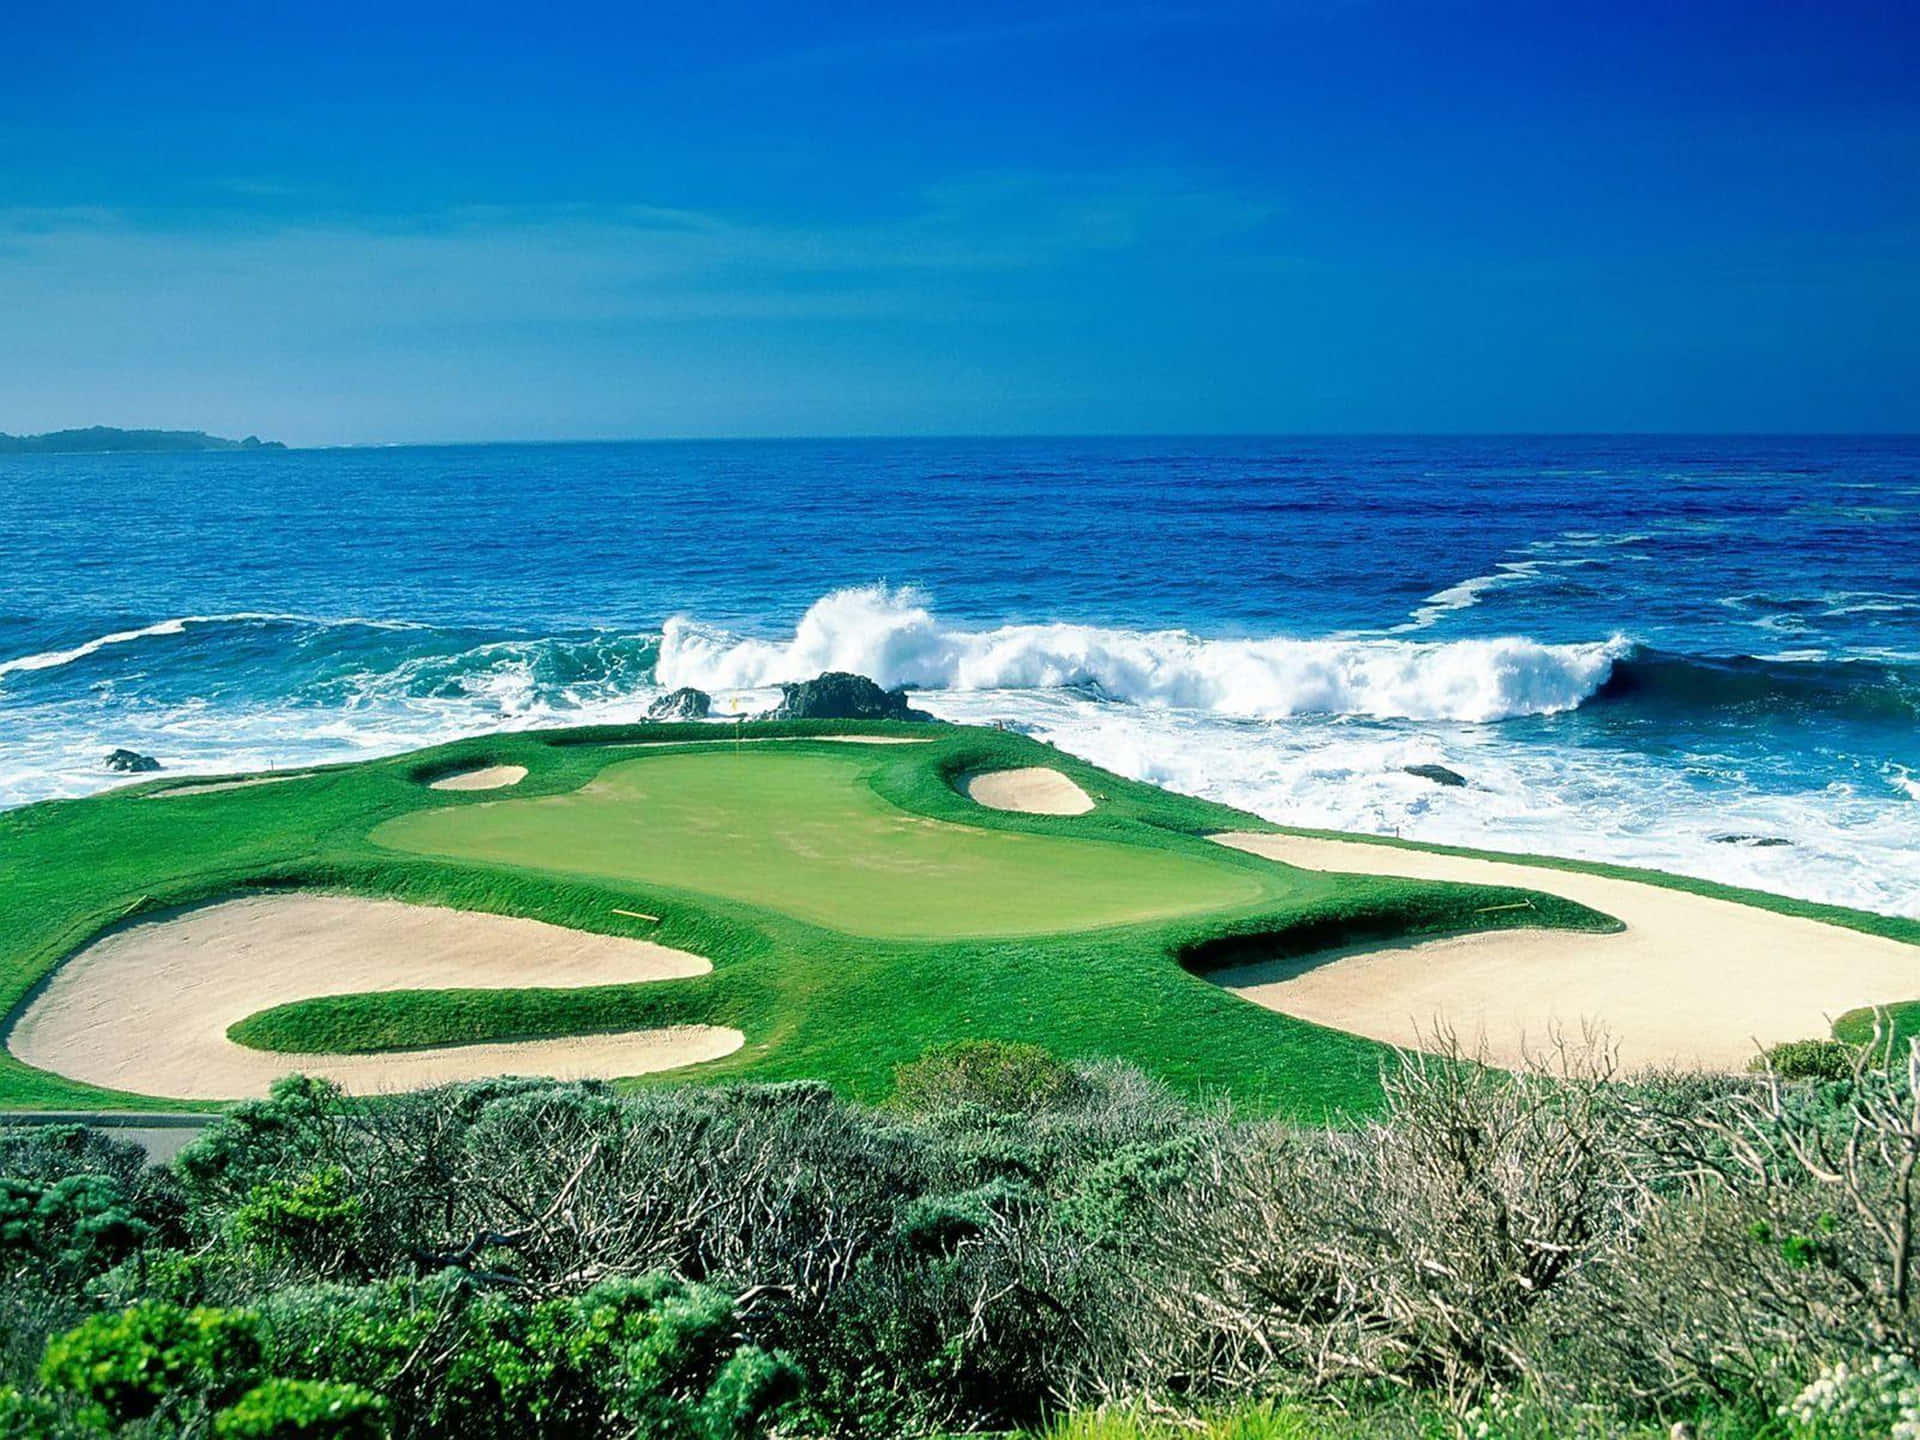 Stunning 4K Golf Course Landscape